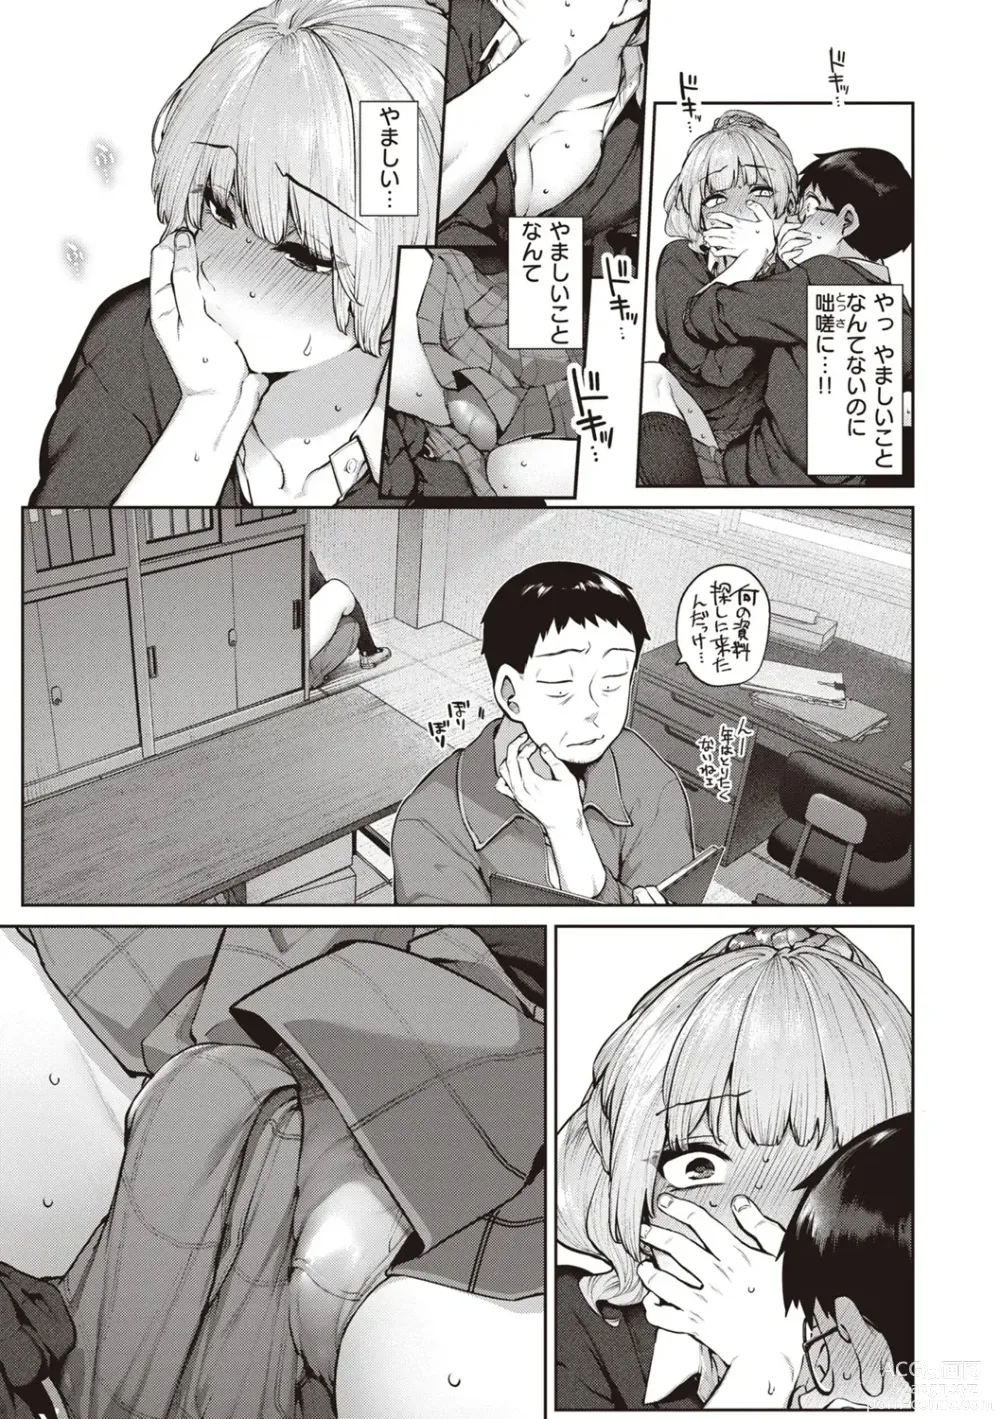 Page 11 of manga DA-DA-MO-RE